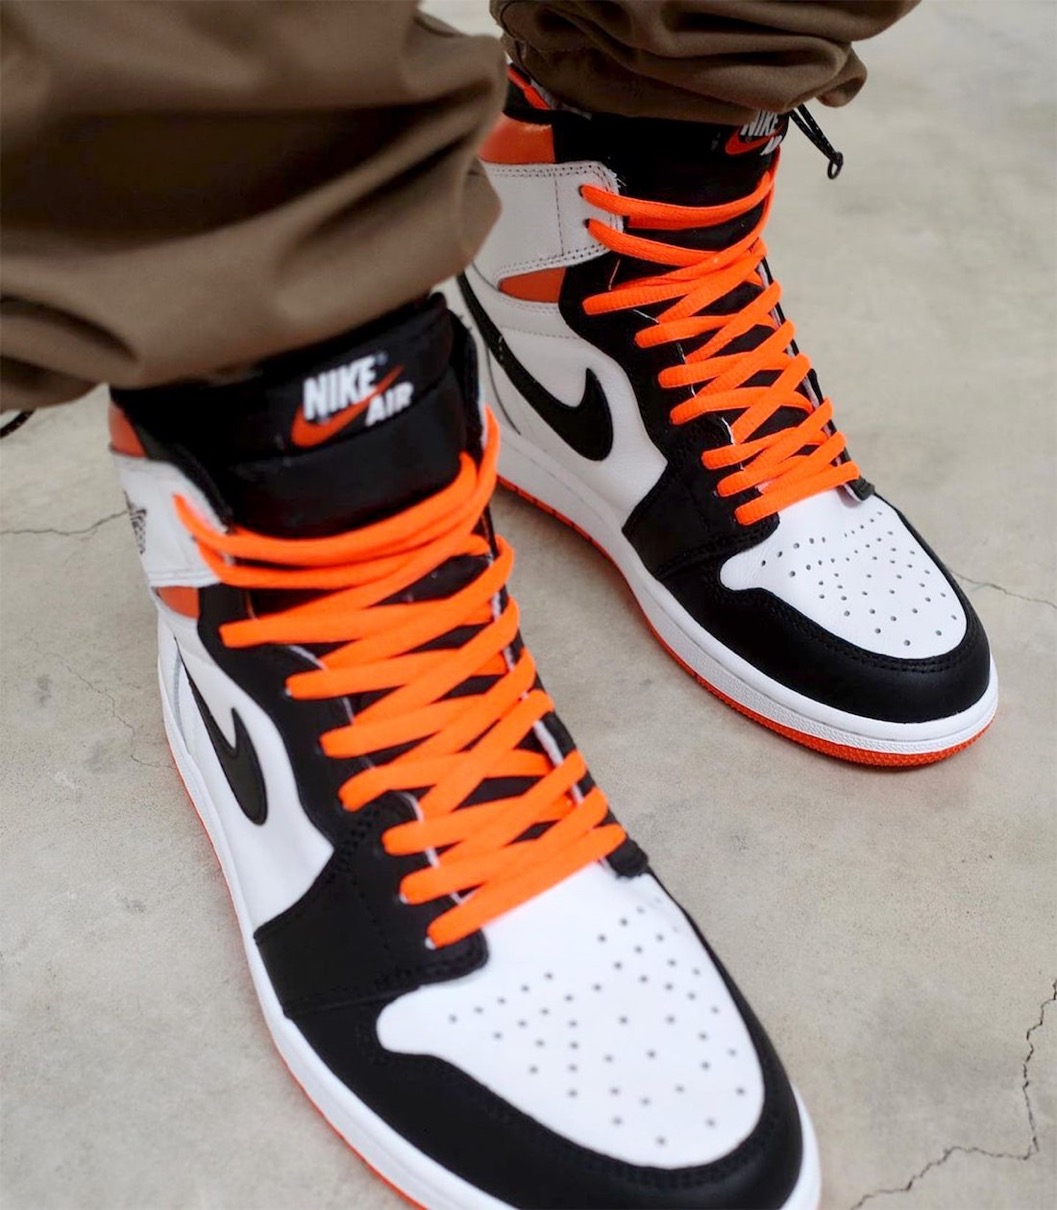 Nike】Air Jordan 1 Retro High OG “Electro Orange”が国内7月26日に 